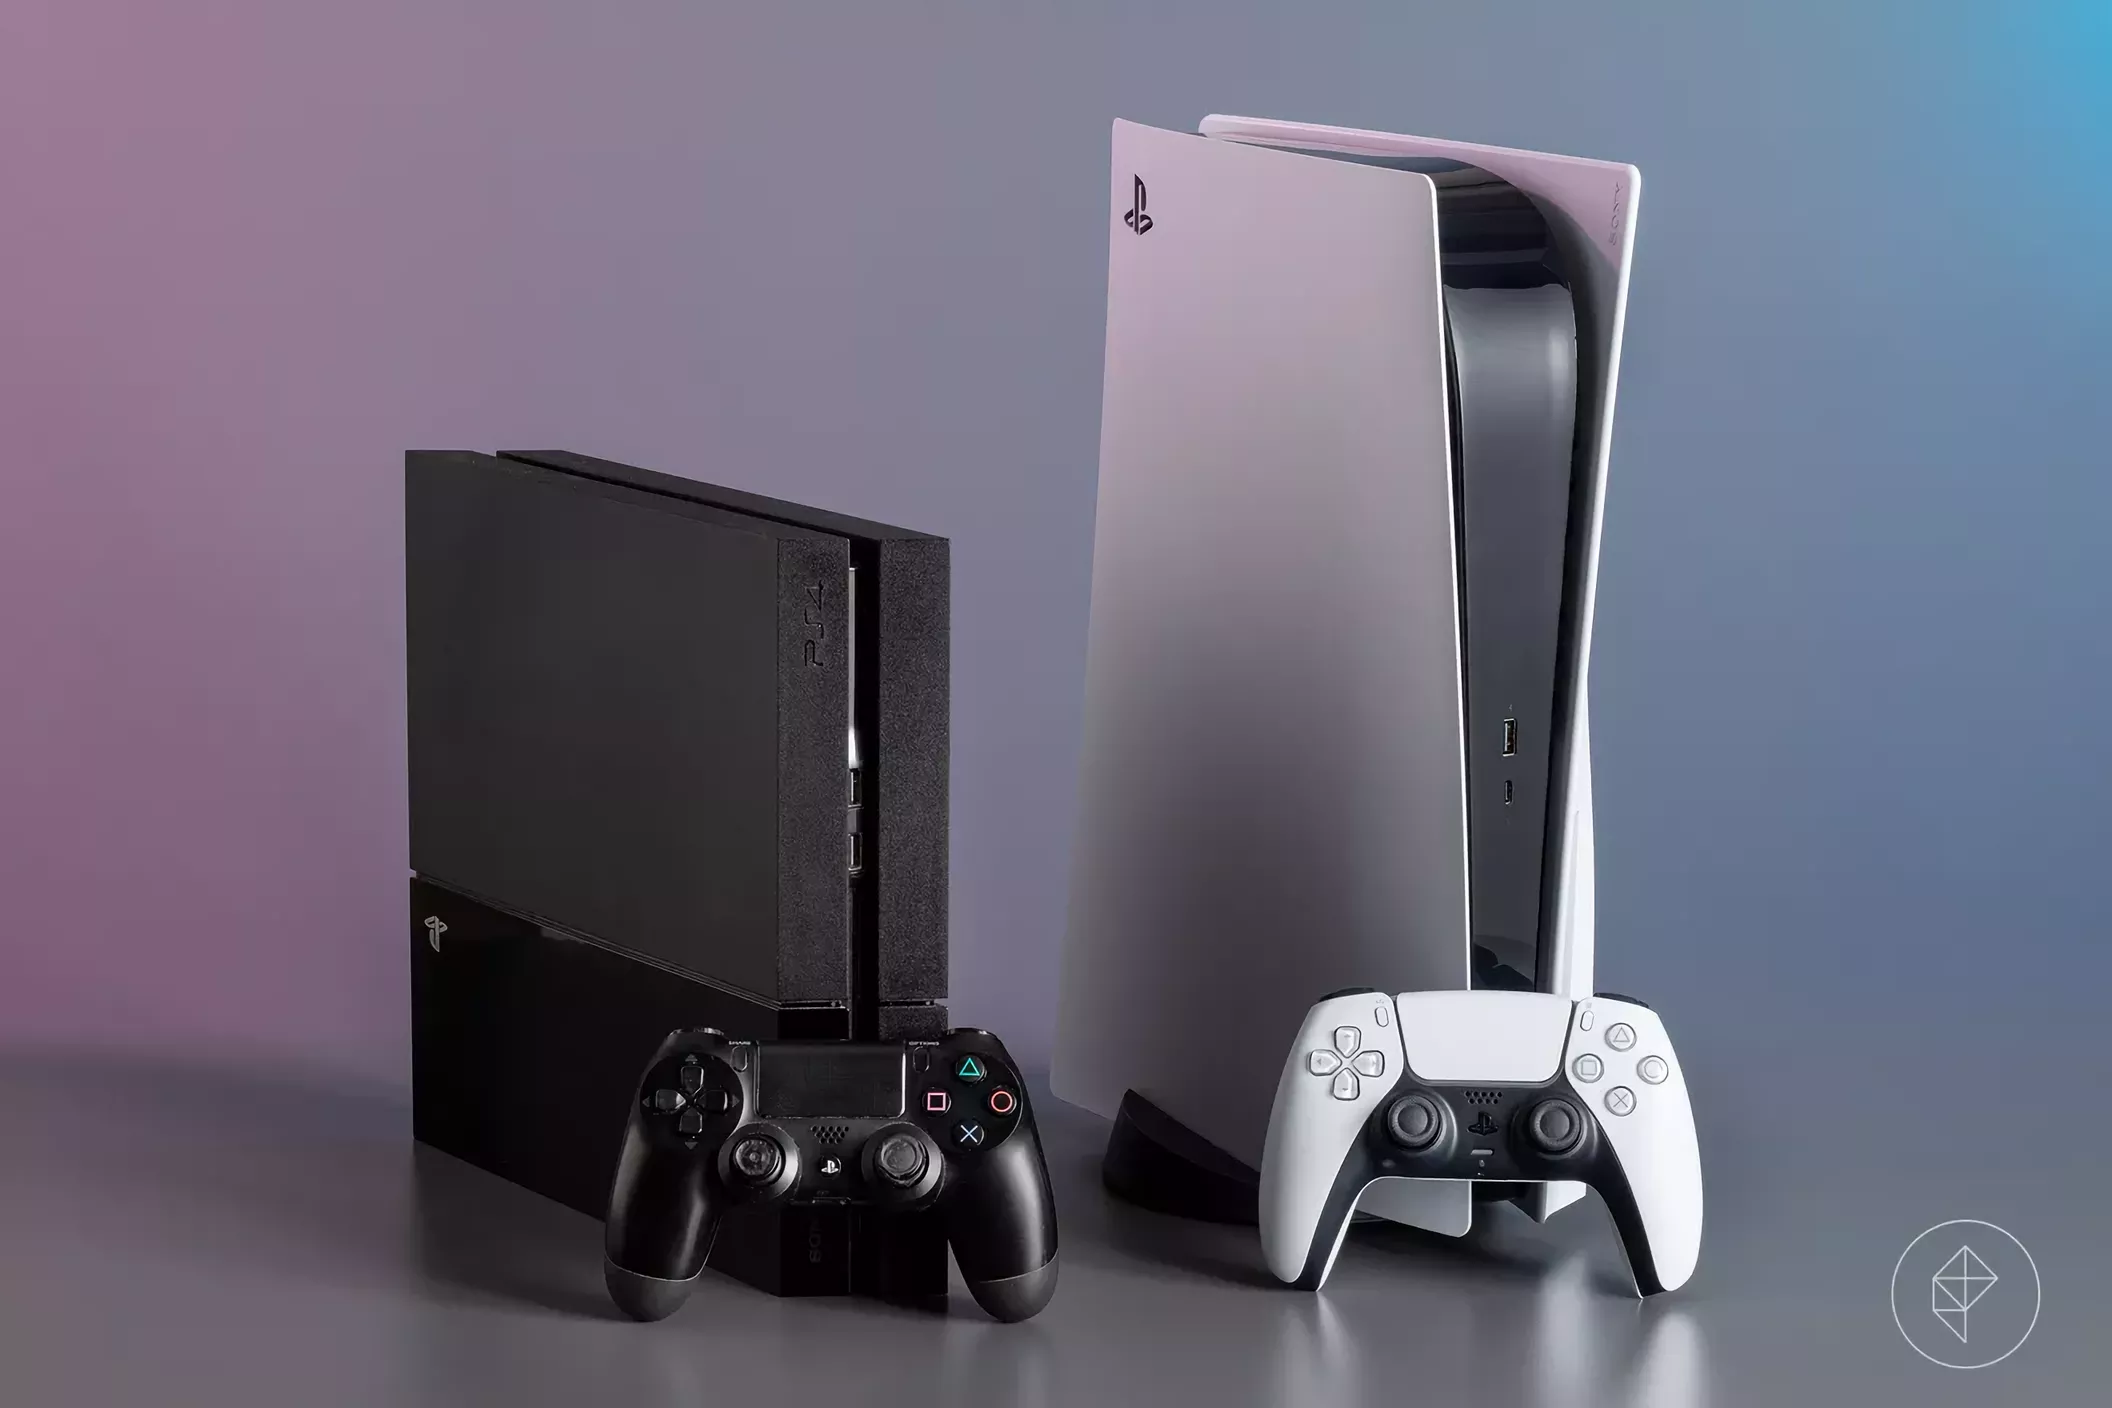 PlayStation 5 review roundup: Big and bold next-gen gaming | TechSpot